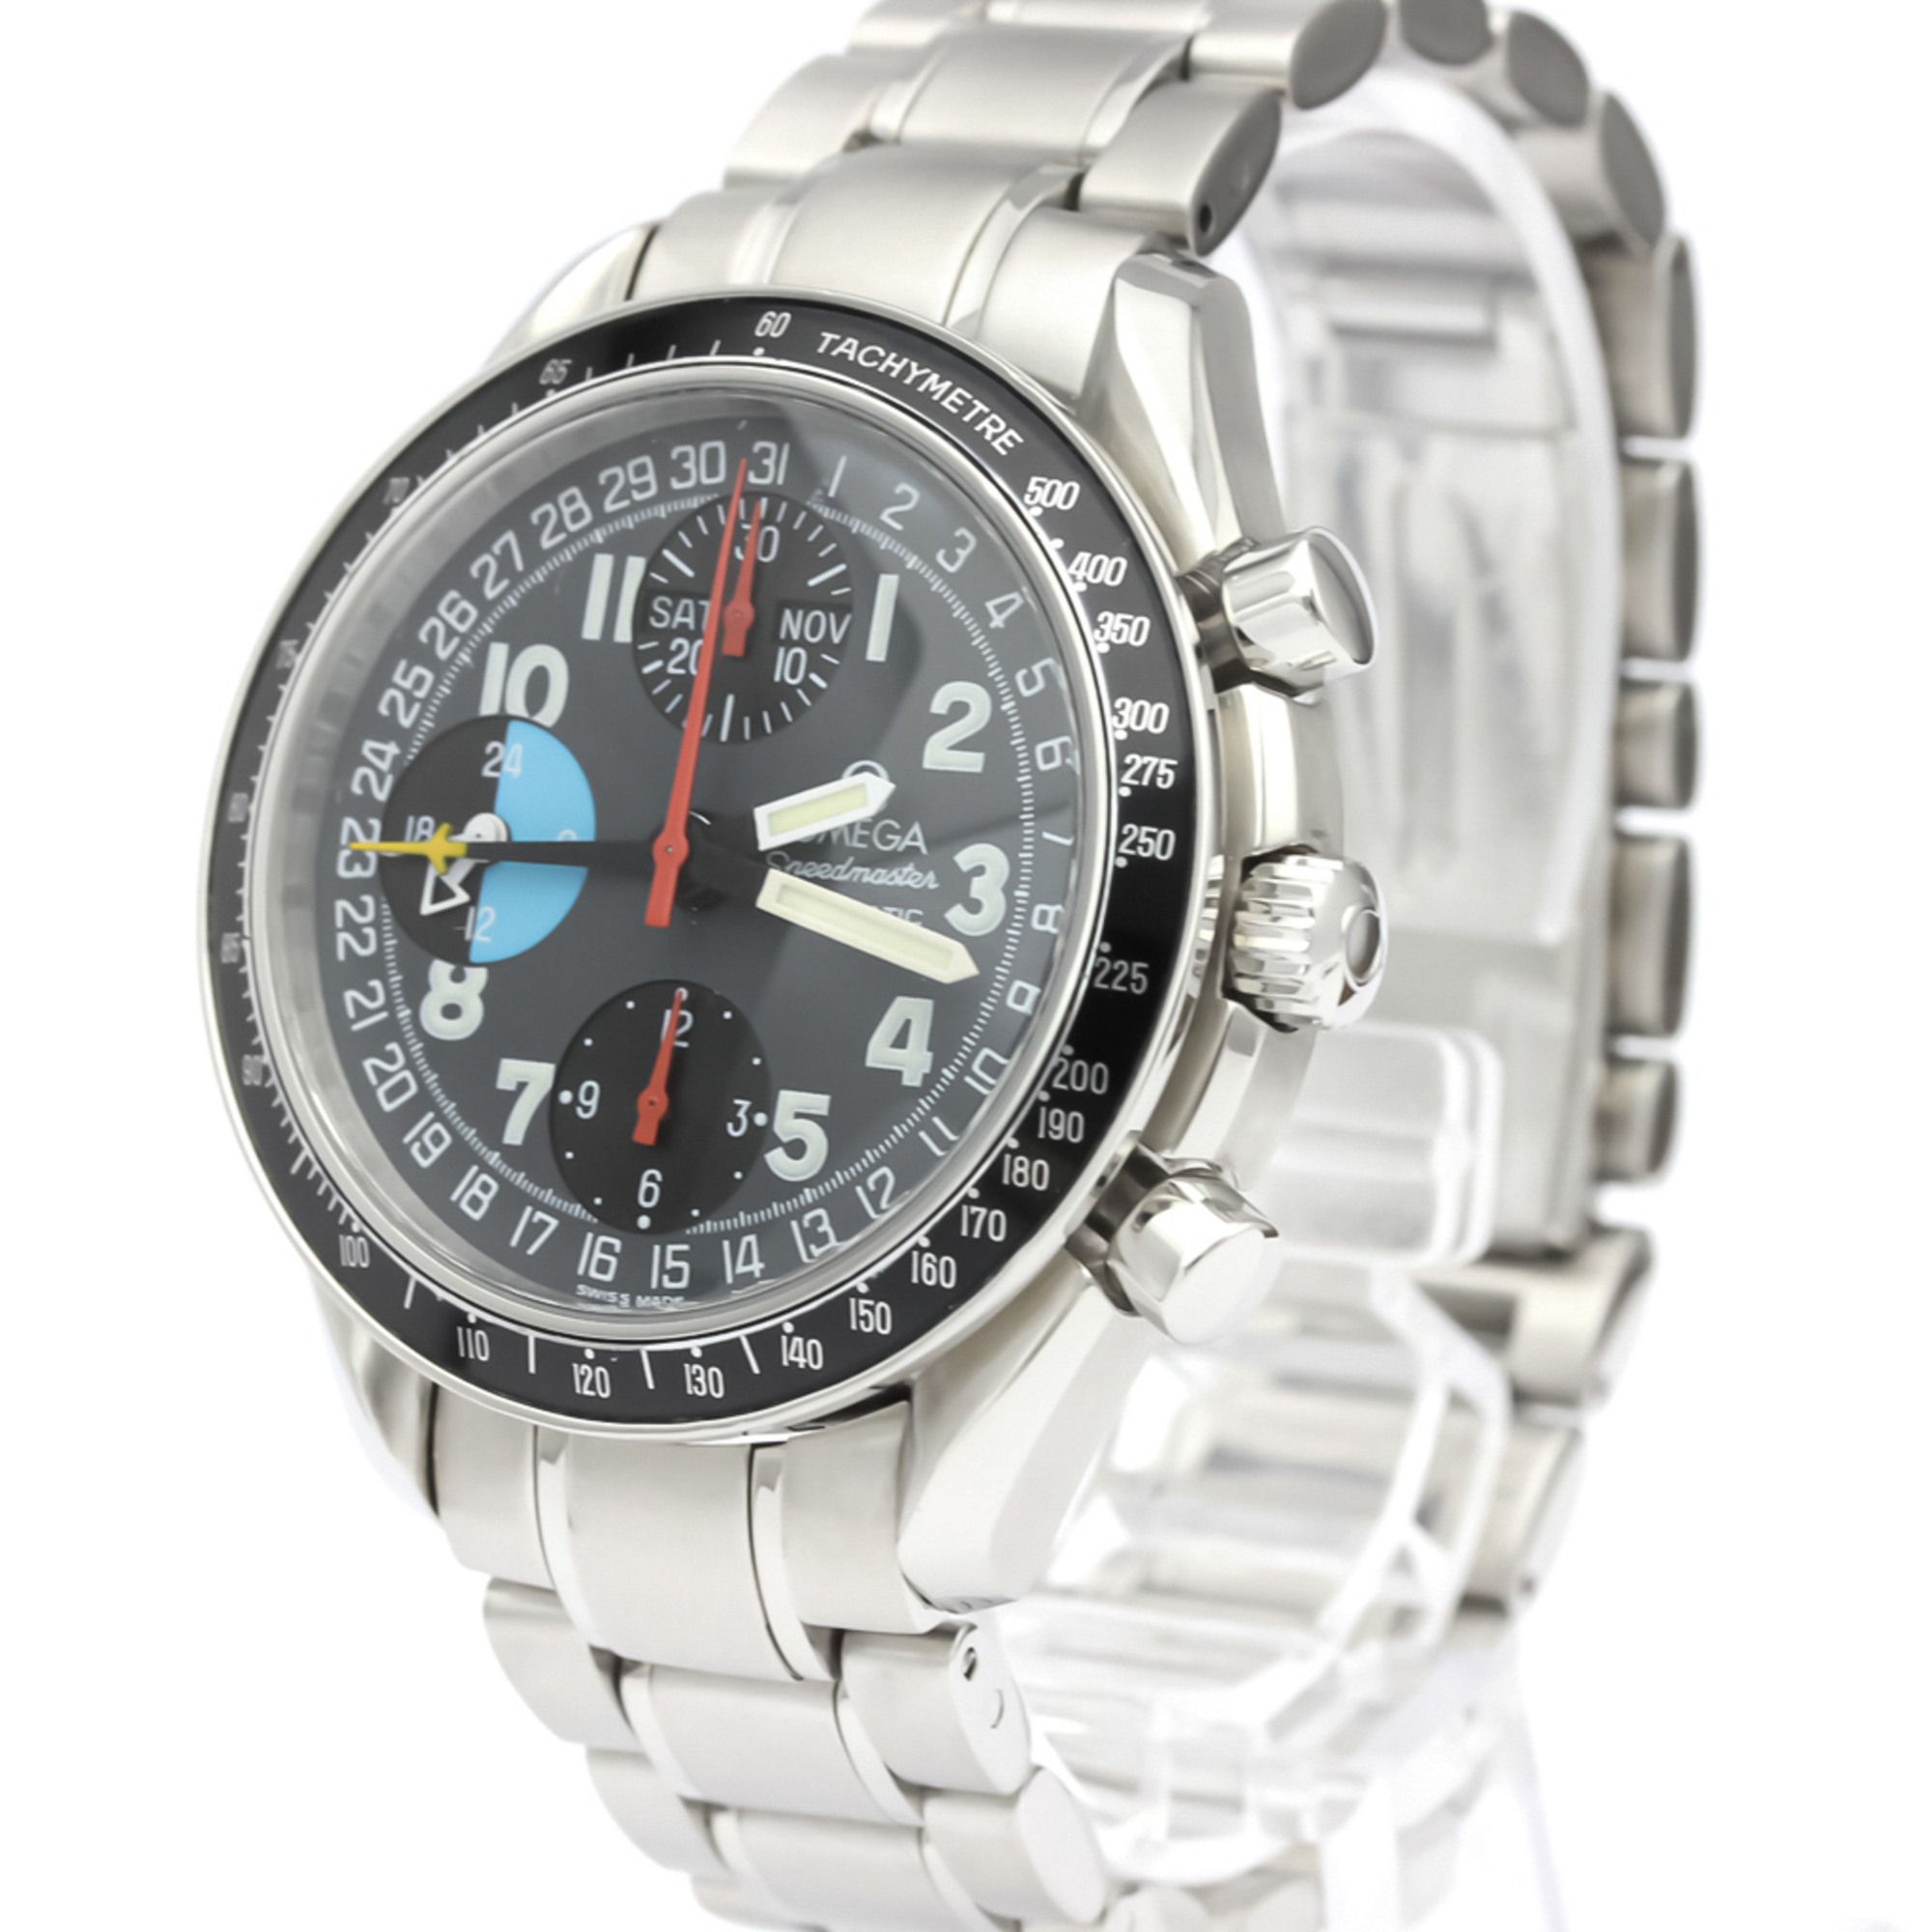 OMEGA Speedmaster Mark 40AM/PM Steel Automatic Watch 3520.53